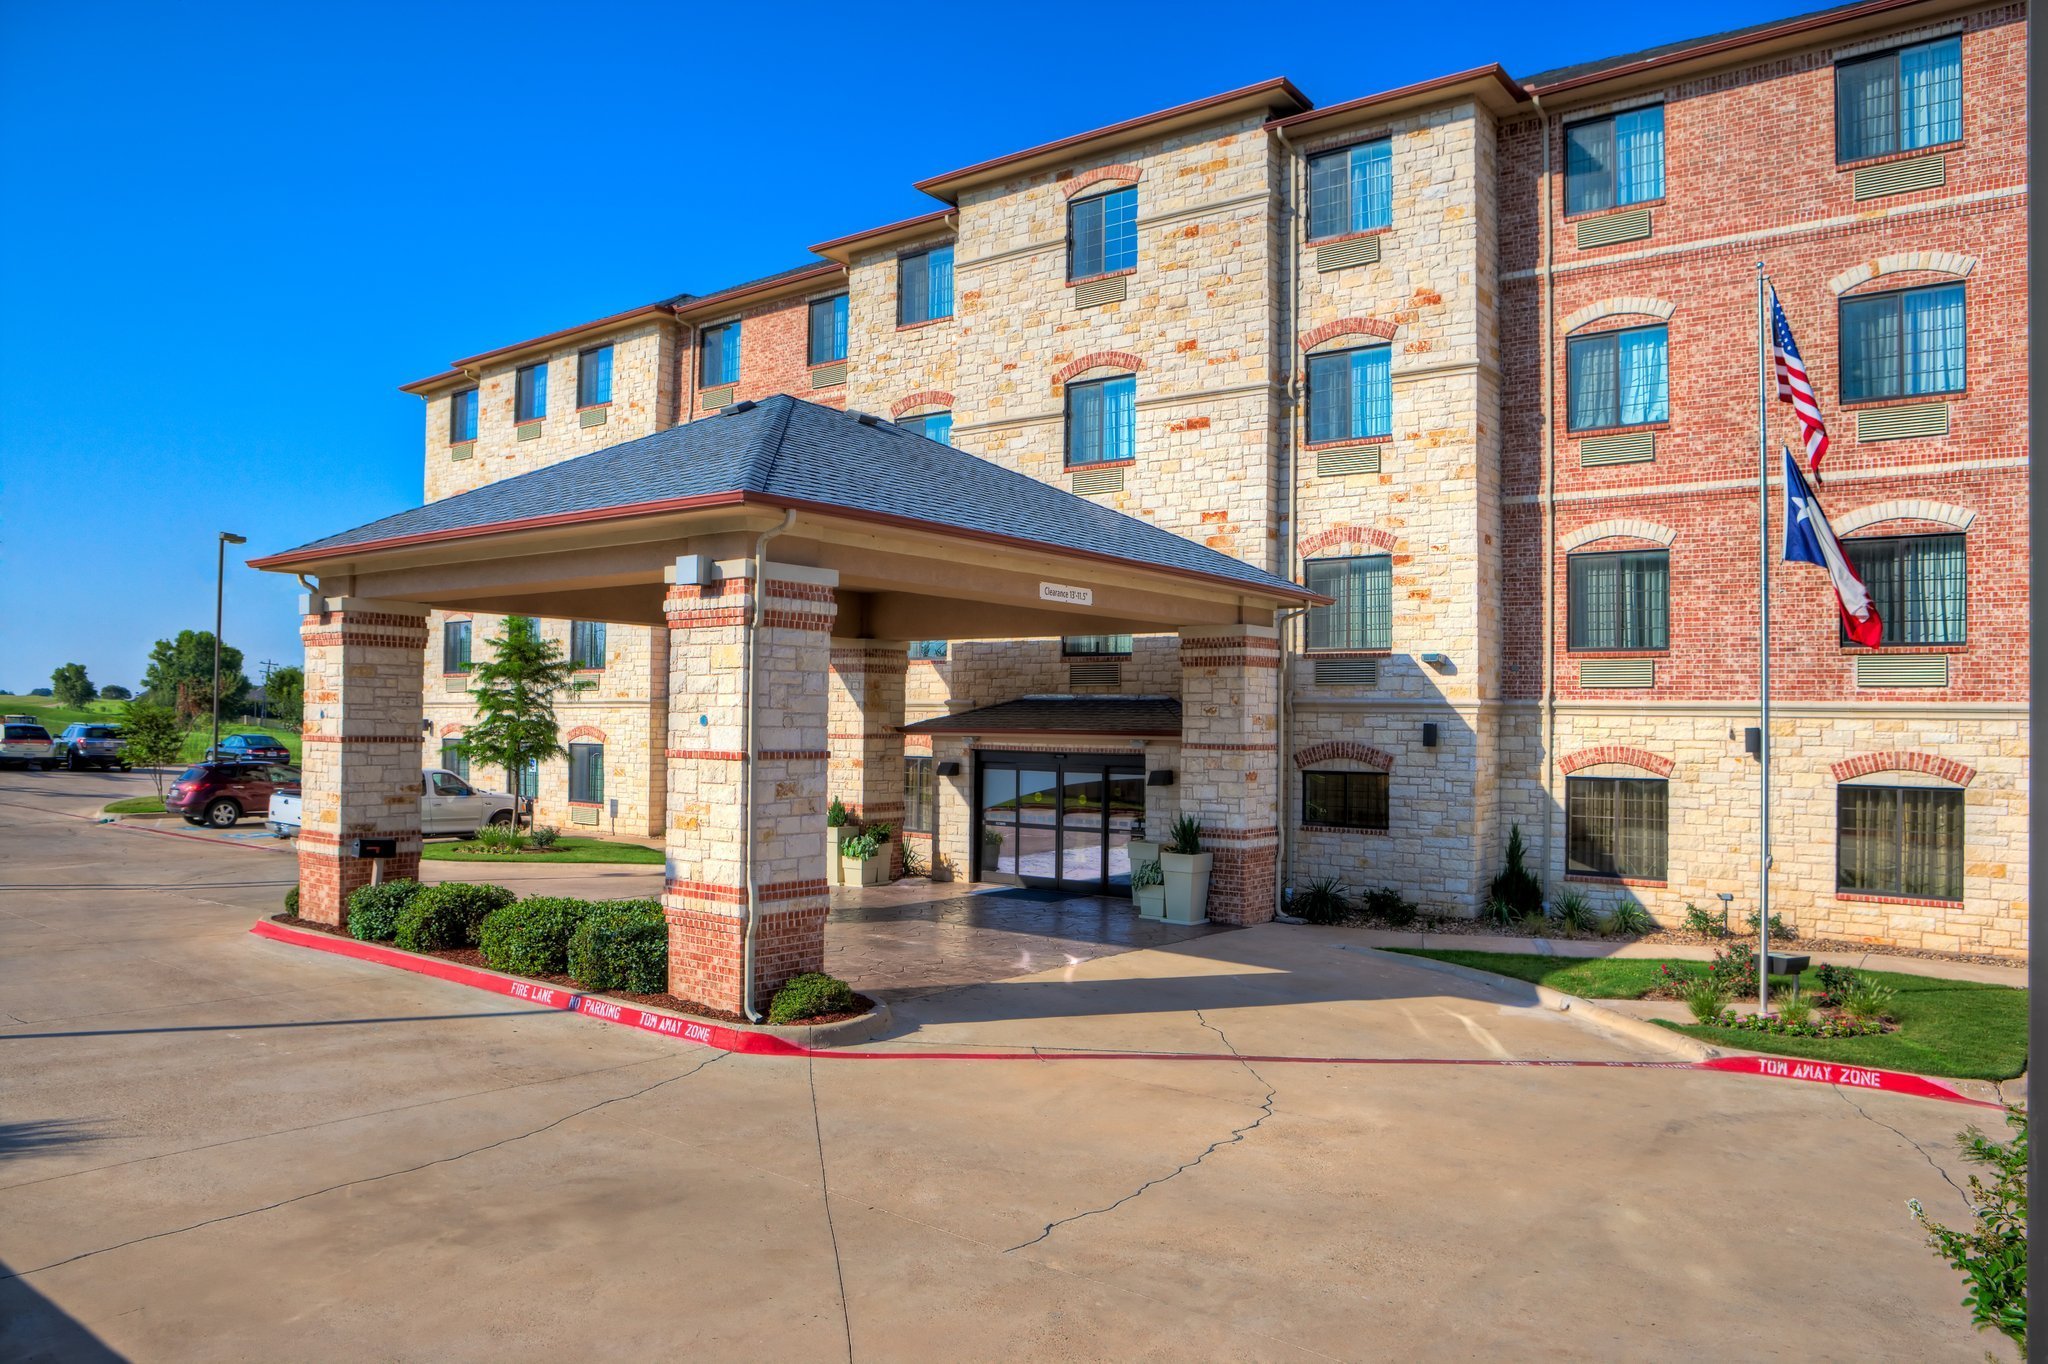 Photo of Holiday Inn Express & Suites Granbury, Granbury, TX